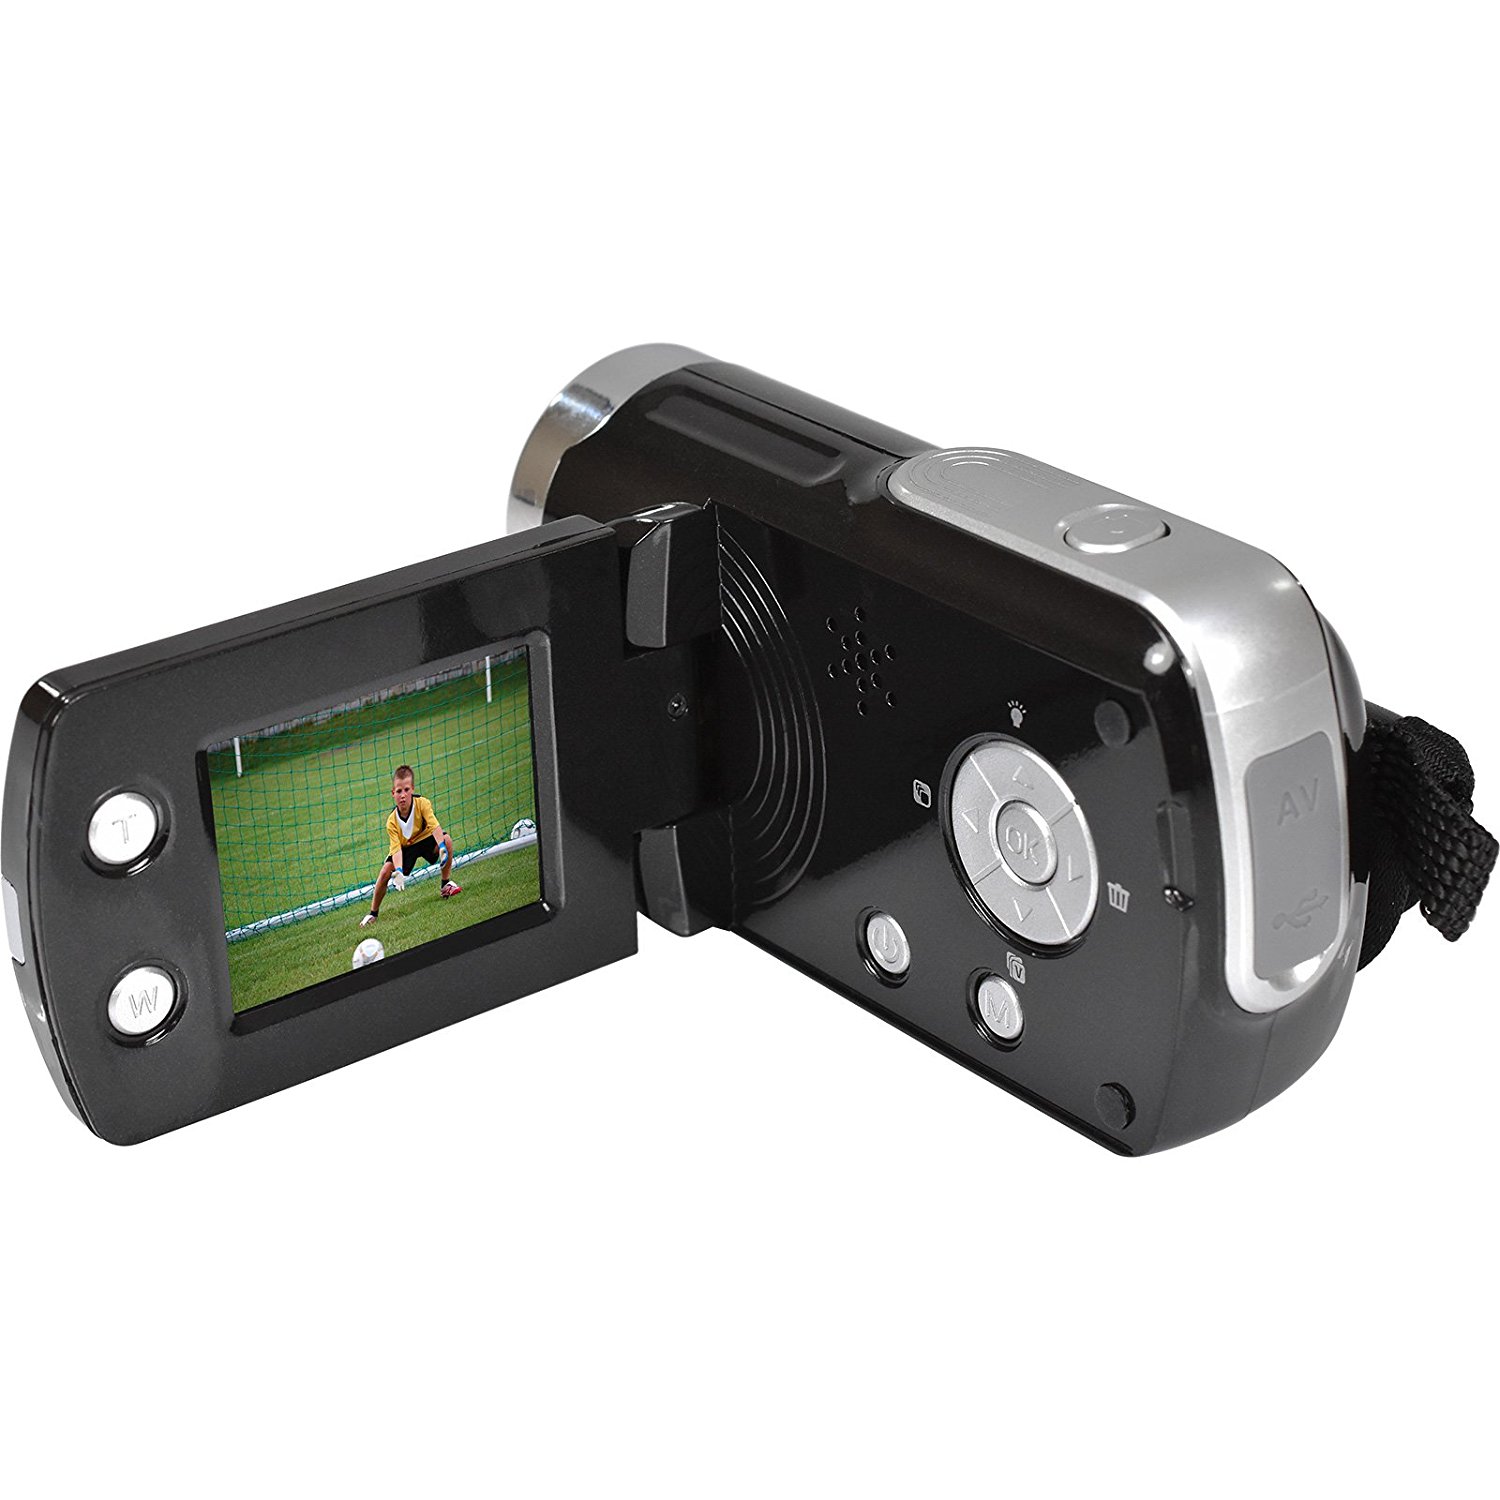 Amazon.com : Vivitar DVR-508 HD Digital Video Camera Camcorder ...